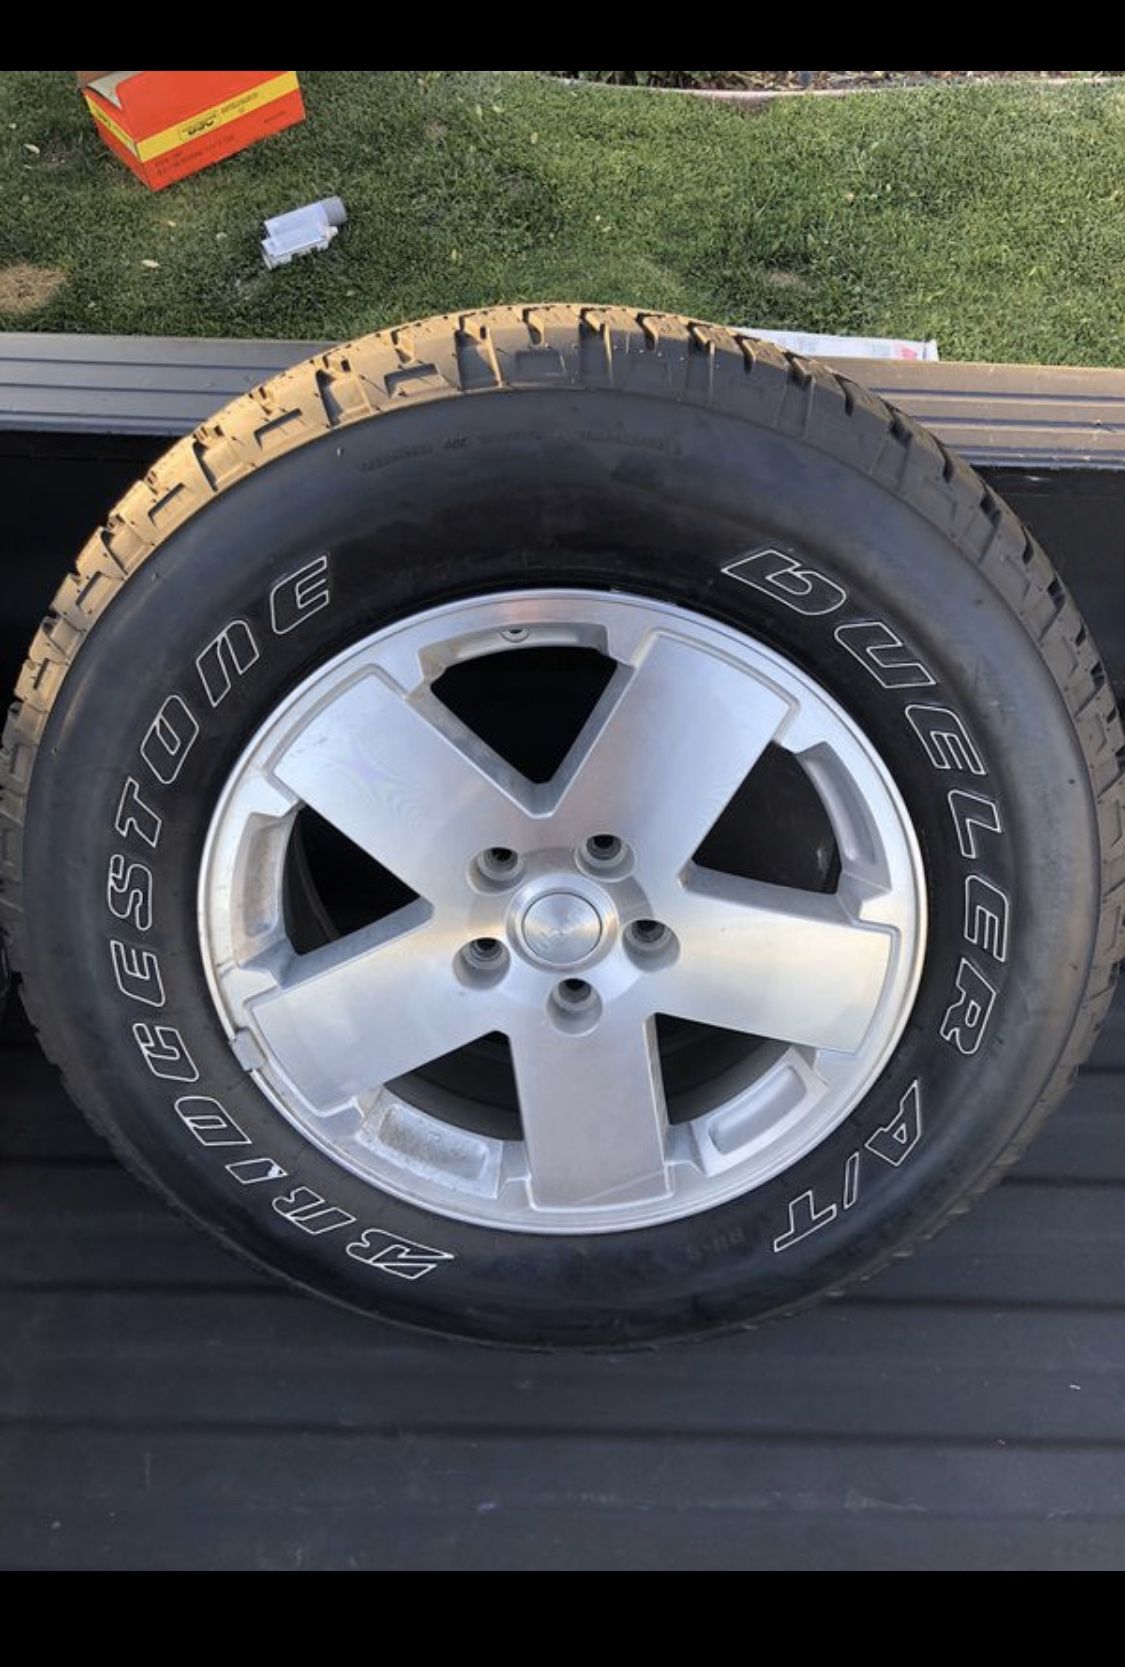 Jeep Wrangler spare tire